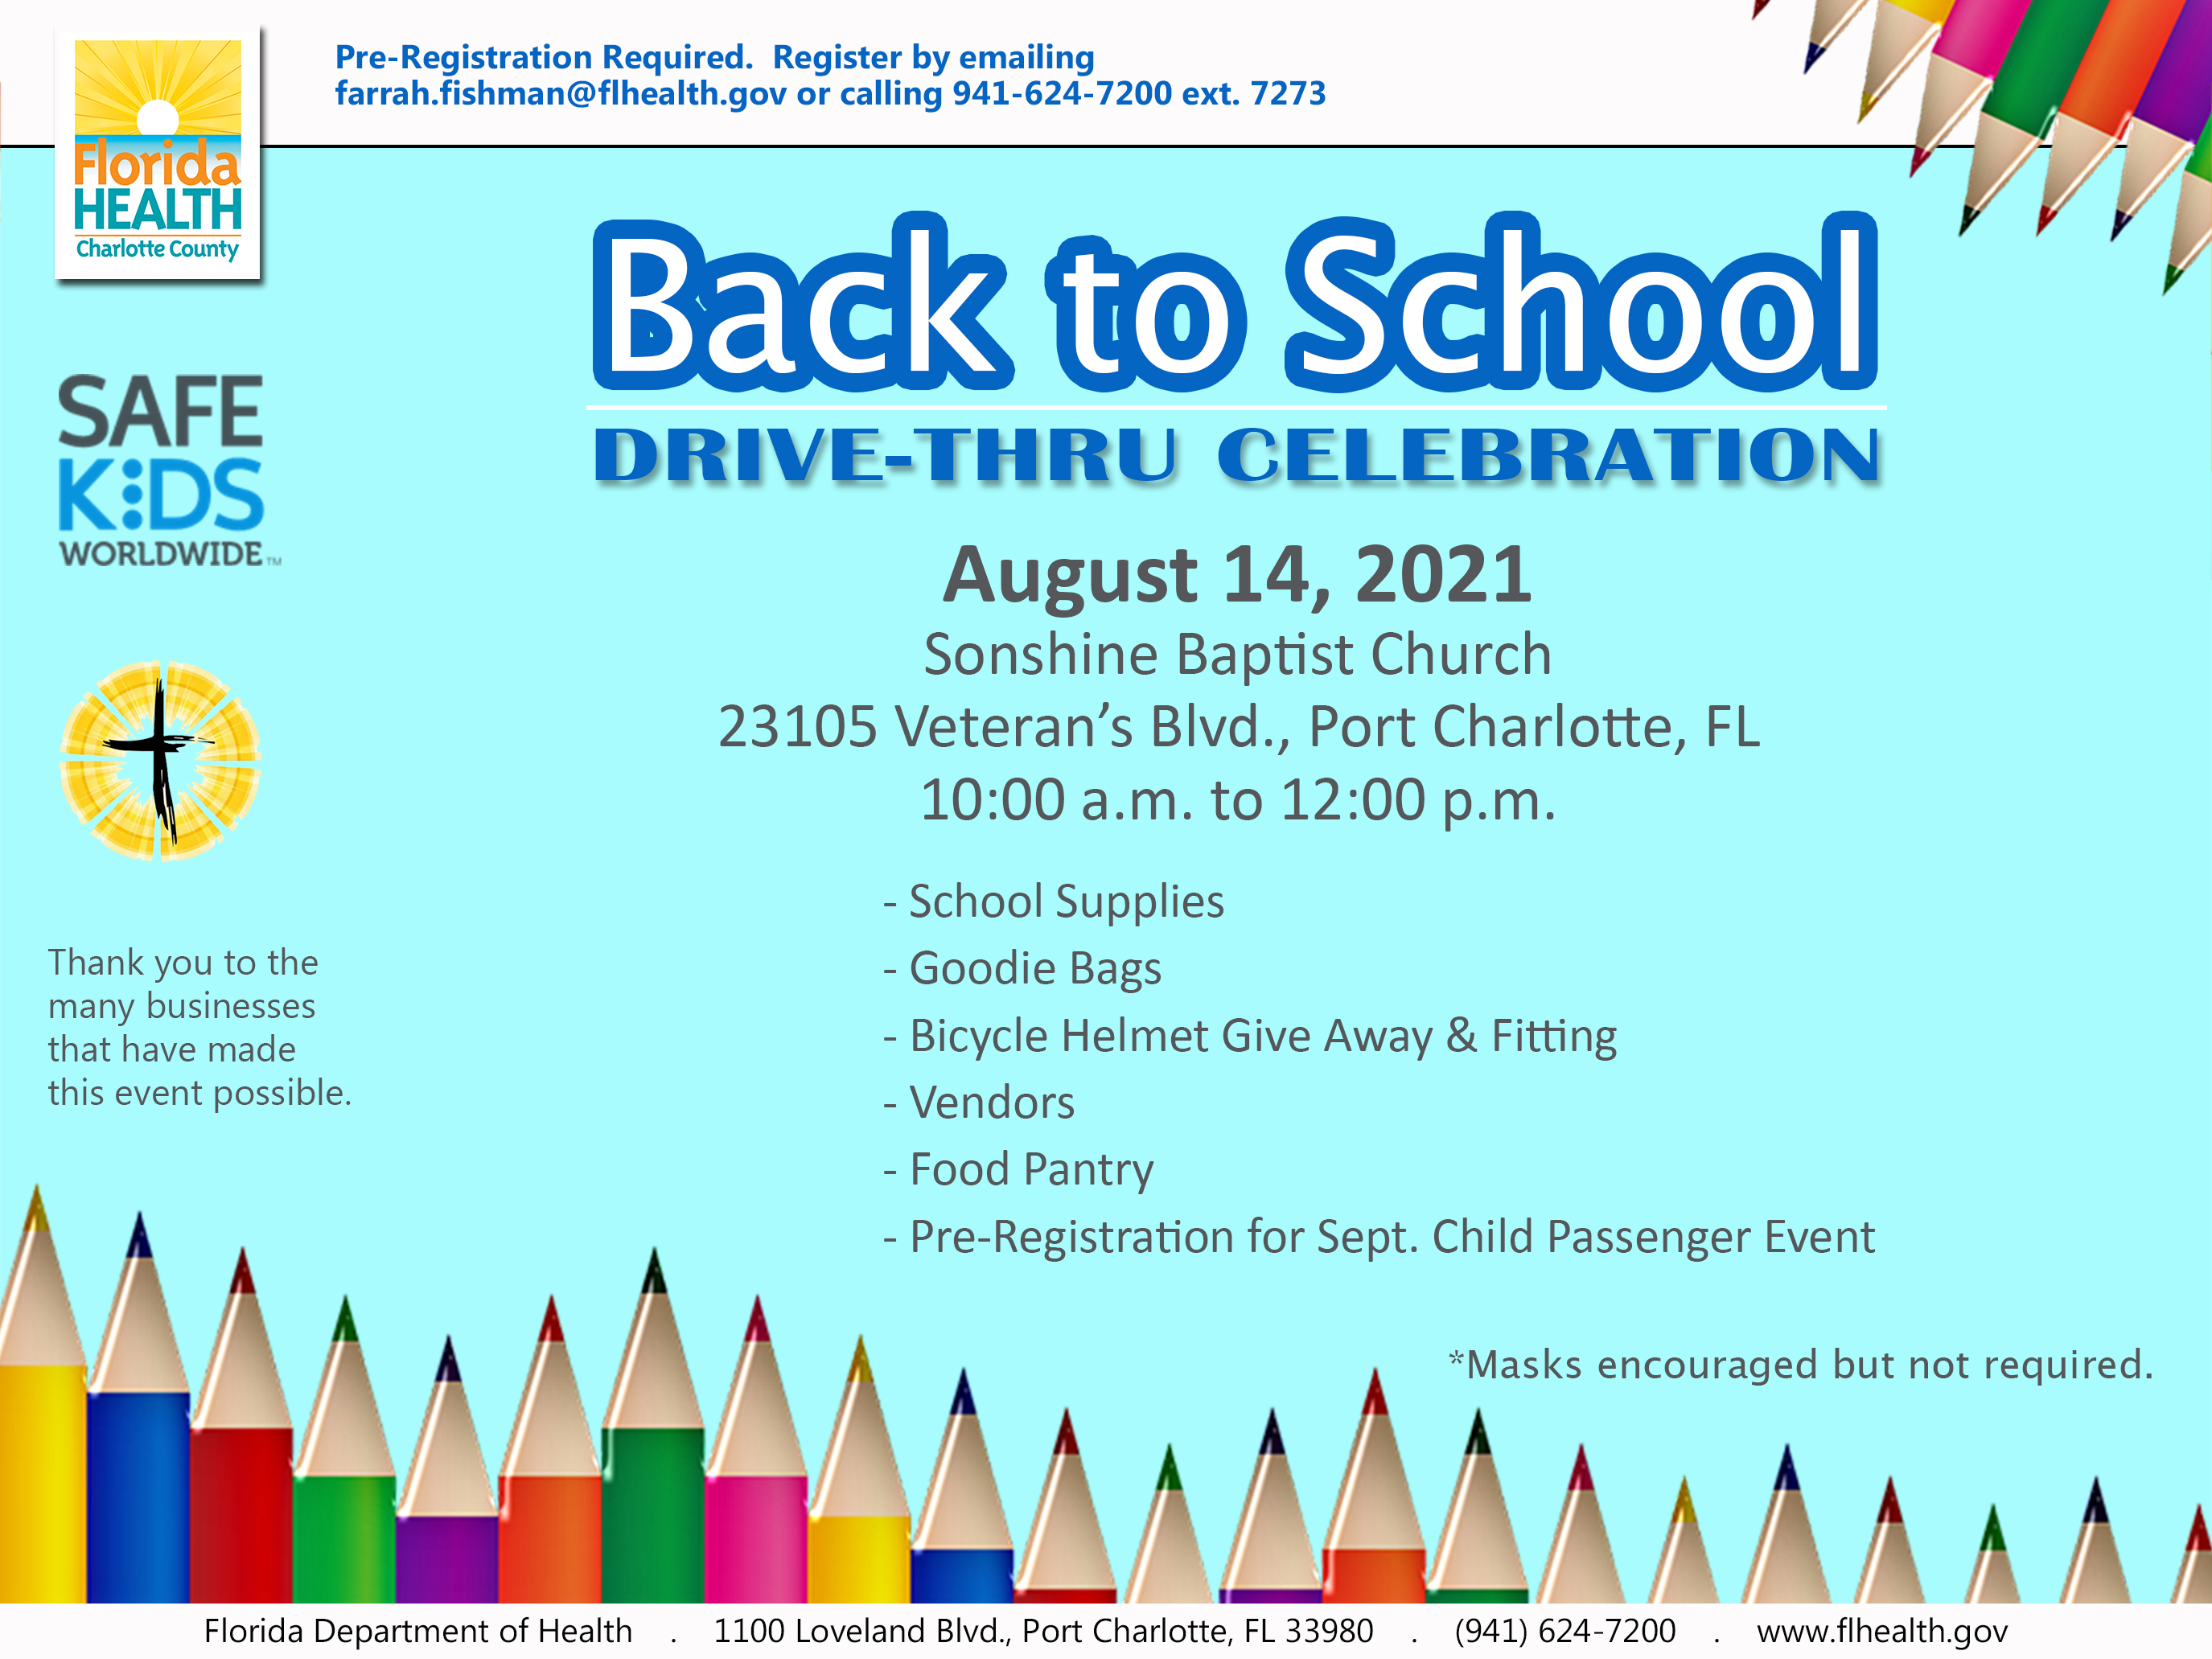 Drive-thru event will be held on Saturday, August 14th, 10:00 am – 12:00 pm. at Sonshine Baptist Church, 23105 Veterans Blvd, Port Charlotte, FL